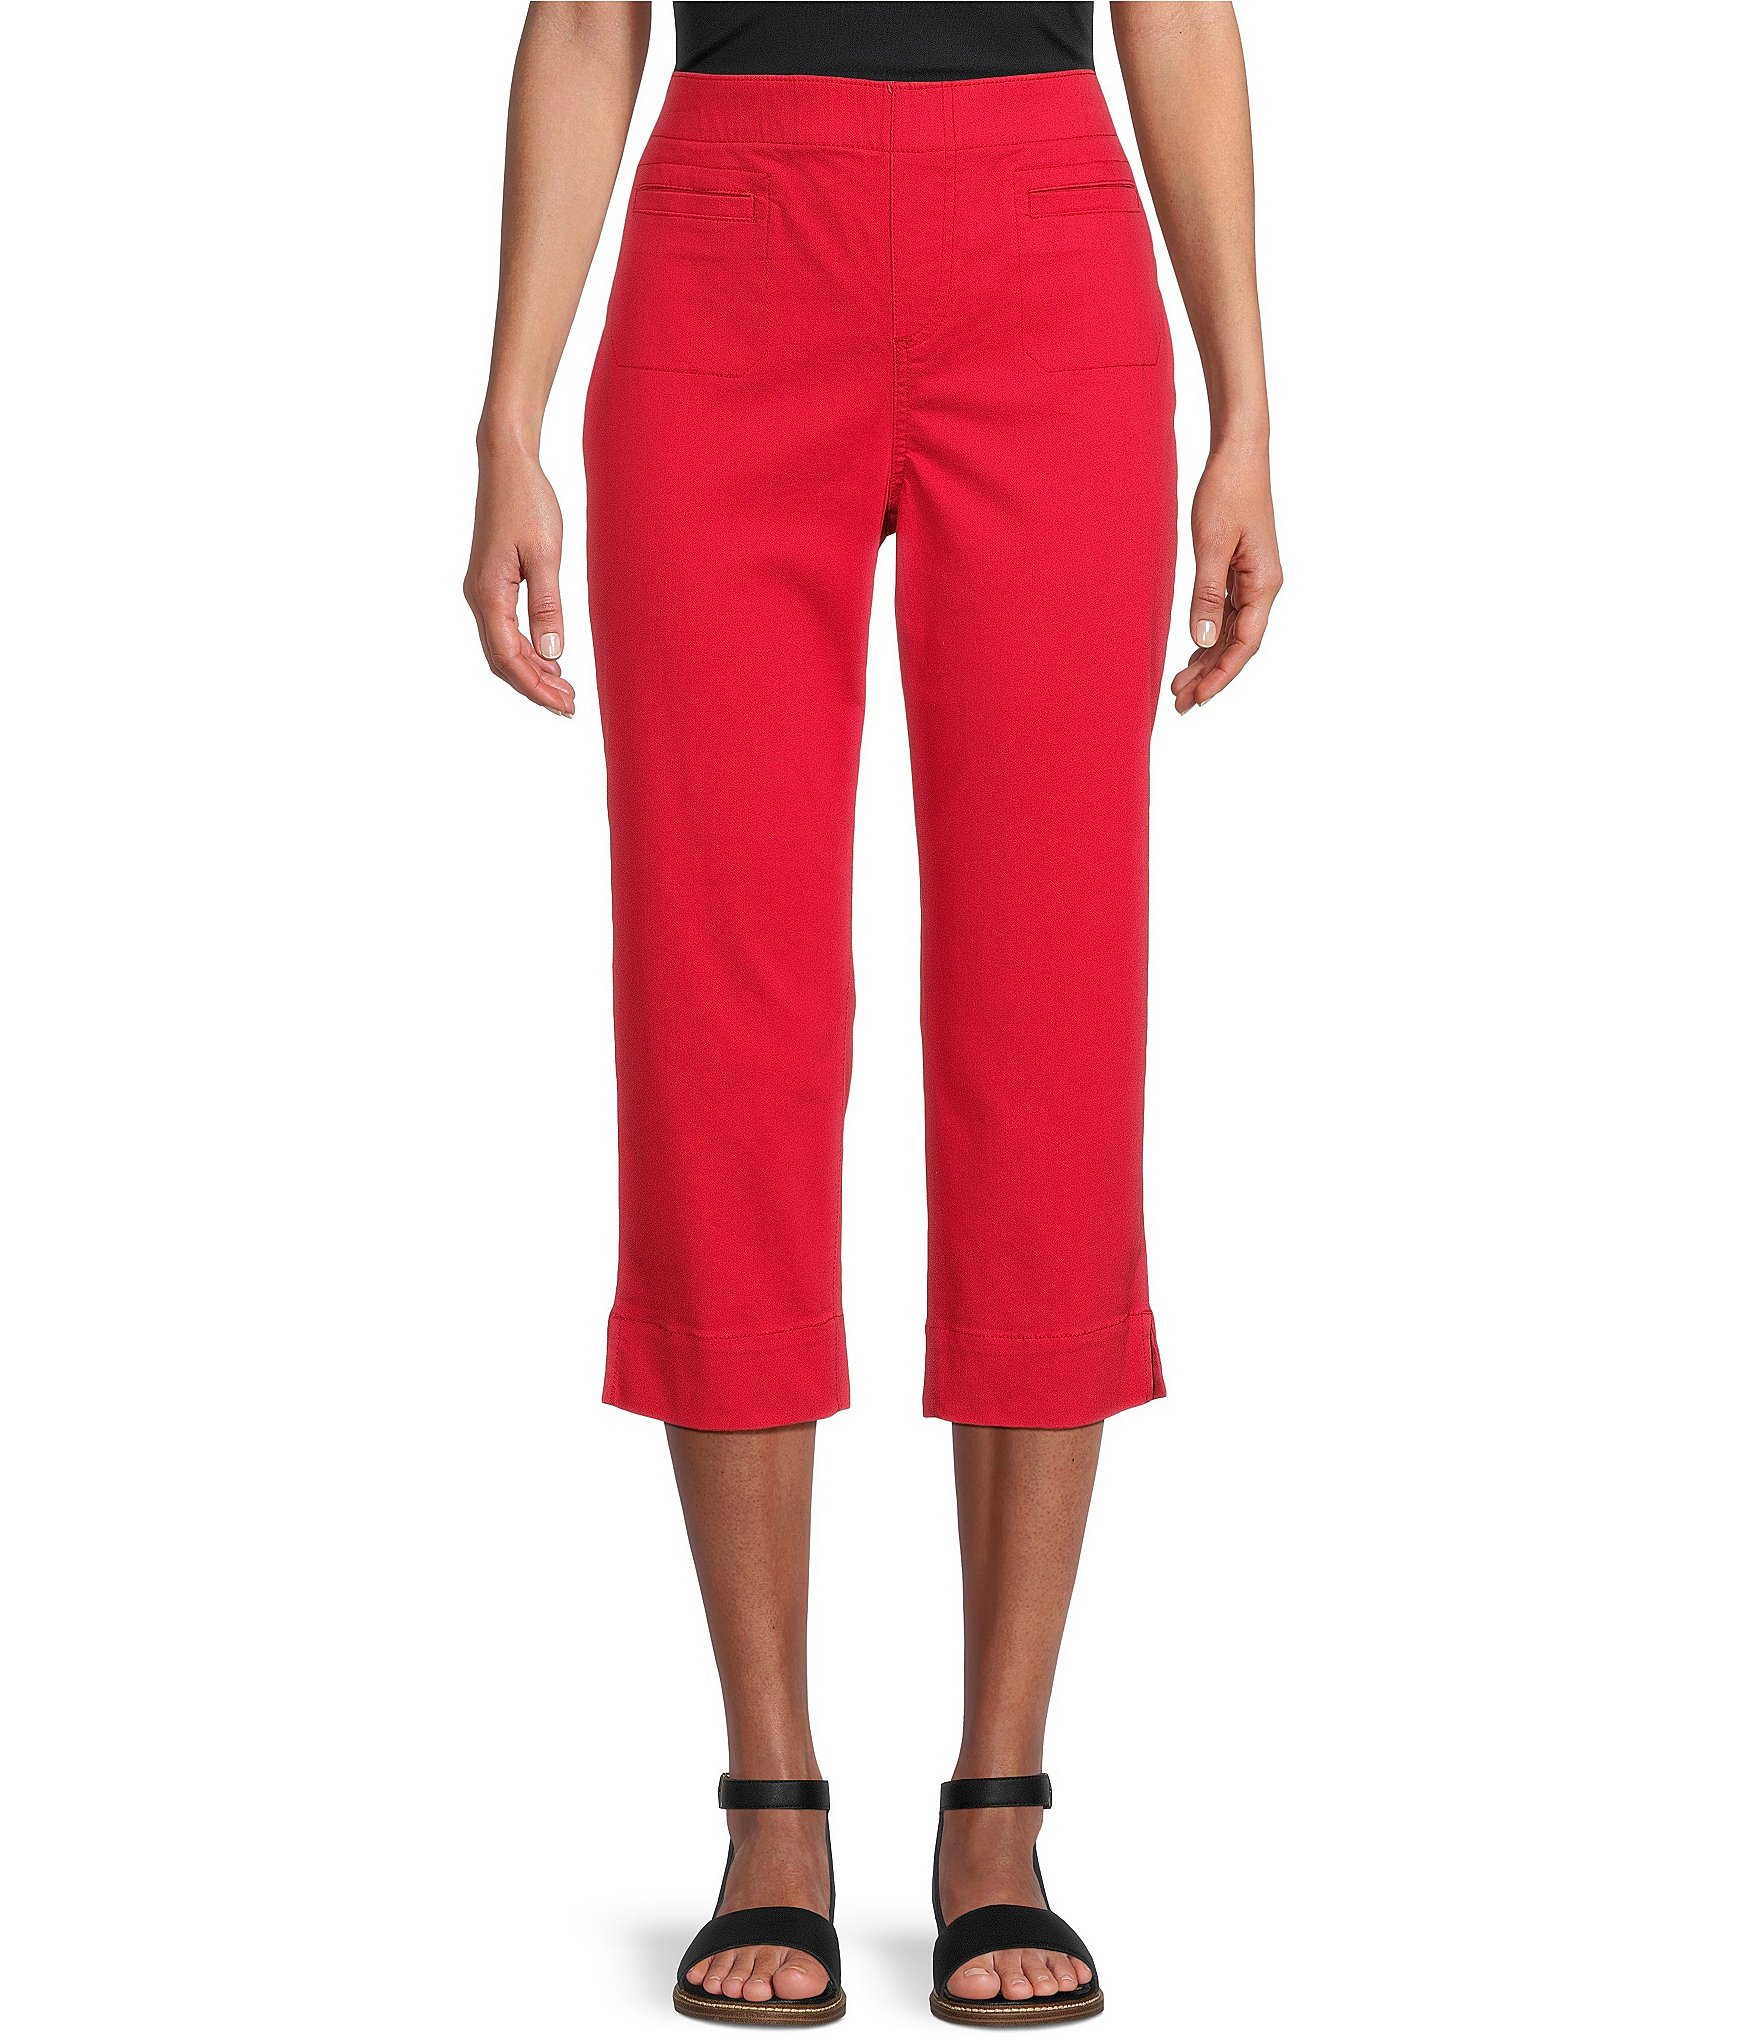 LL Bean Women's Size 20 Khaki Capris With Slits & Pockets